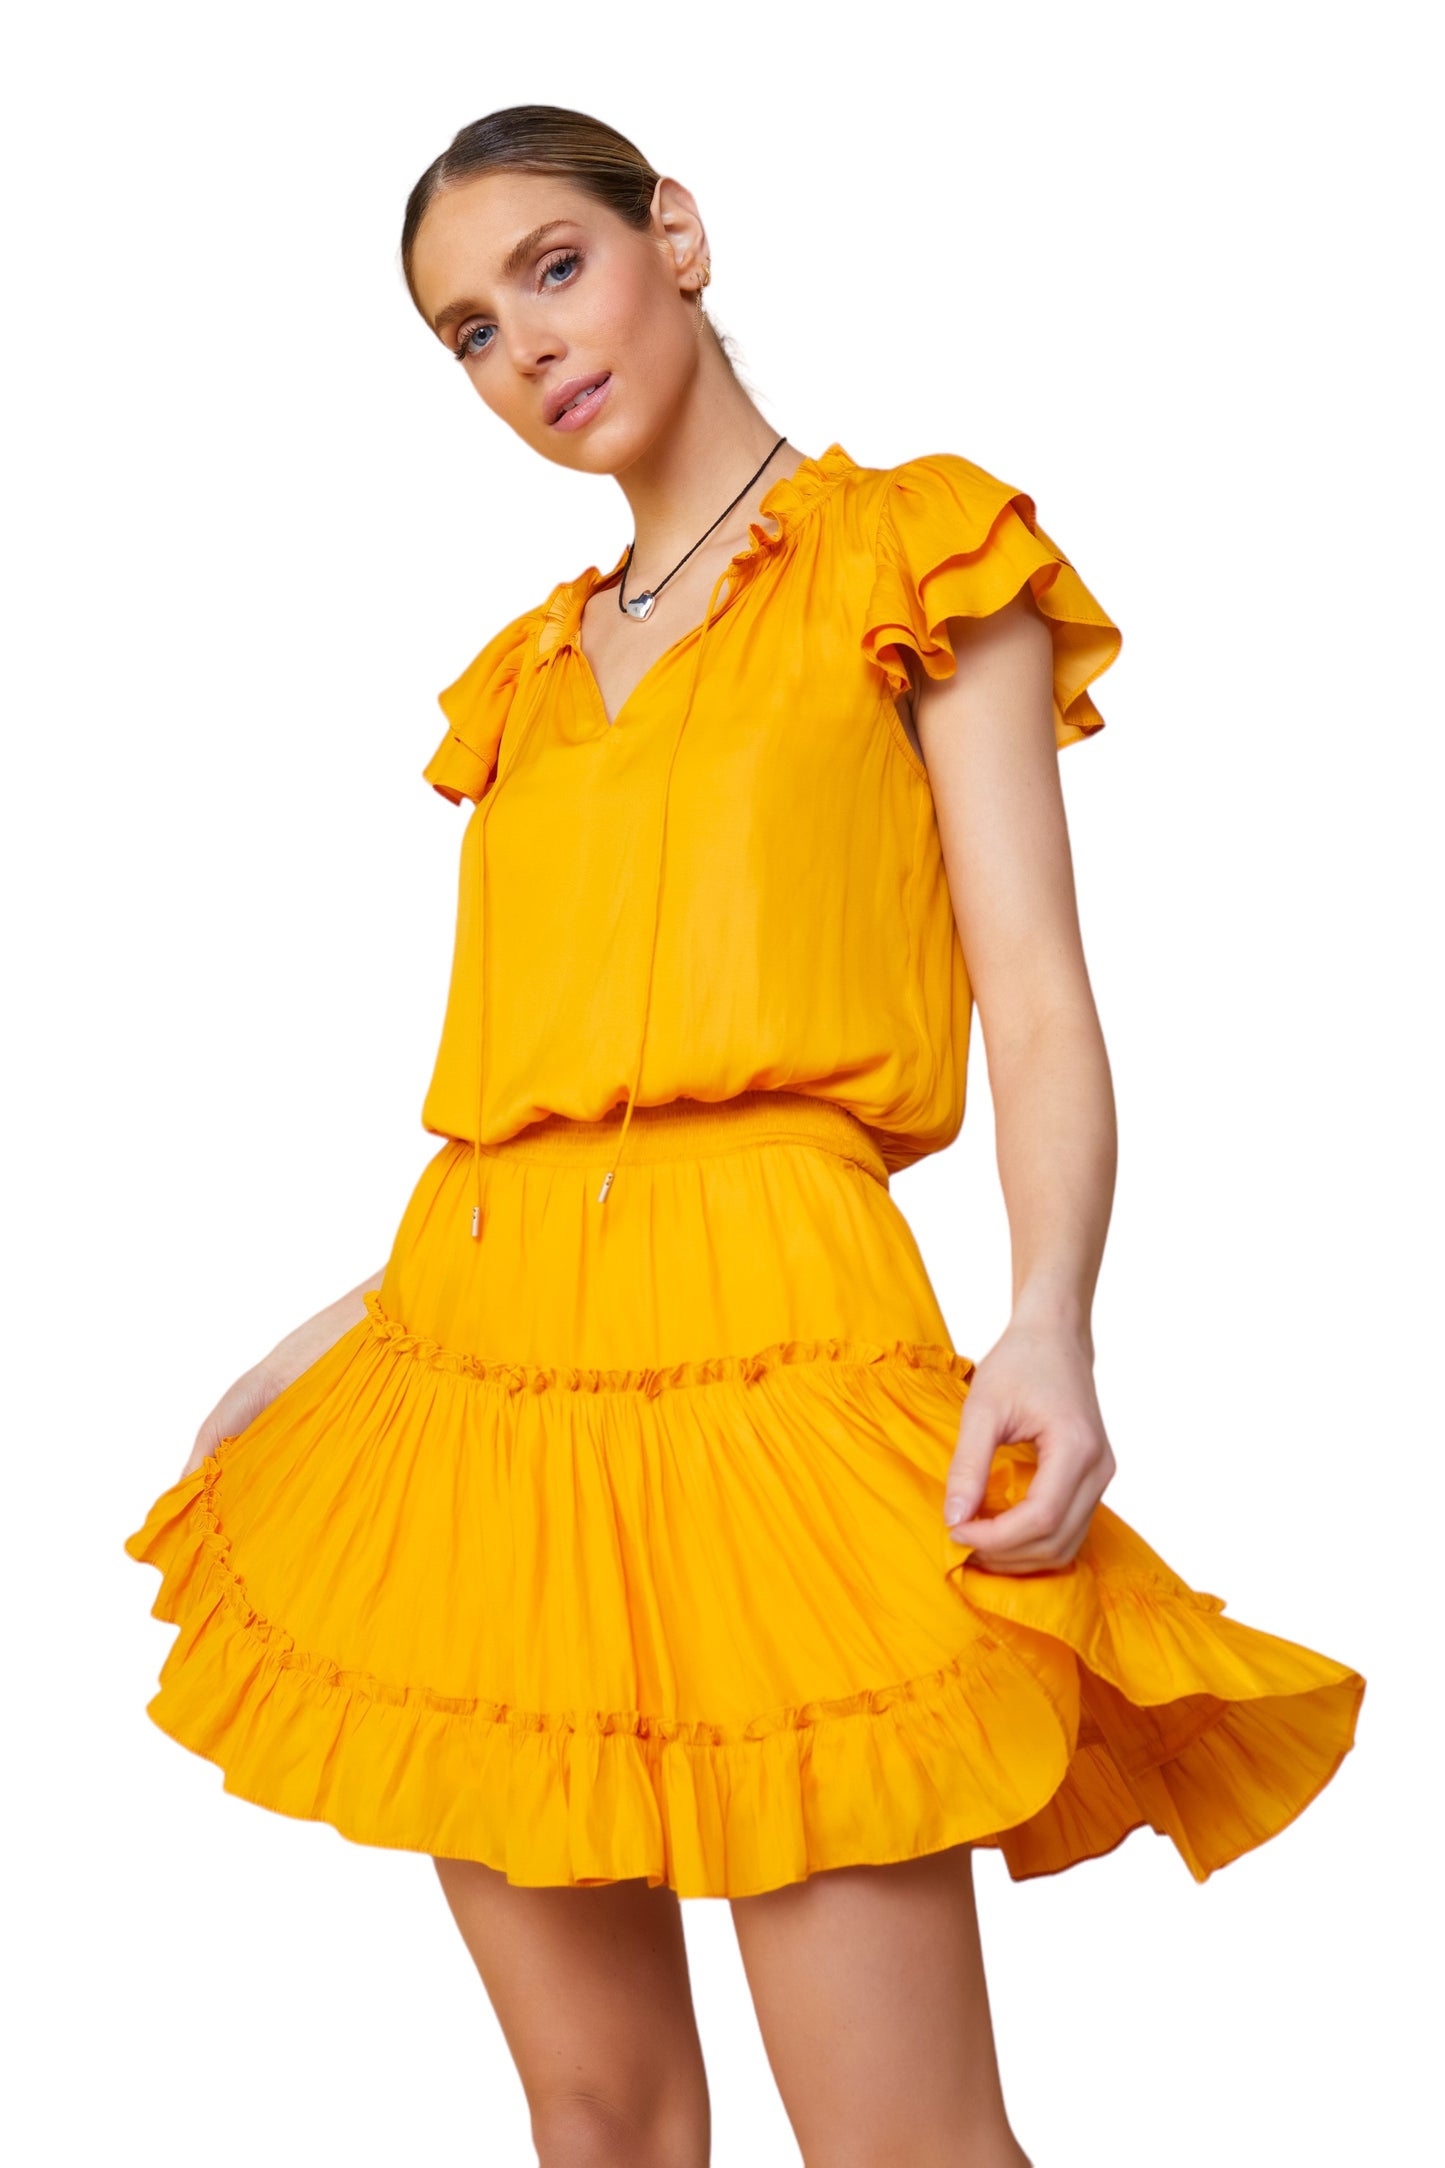 Makes Me Happy Marigold Dress